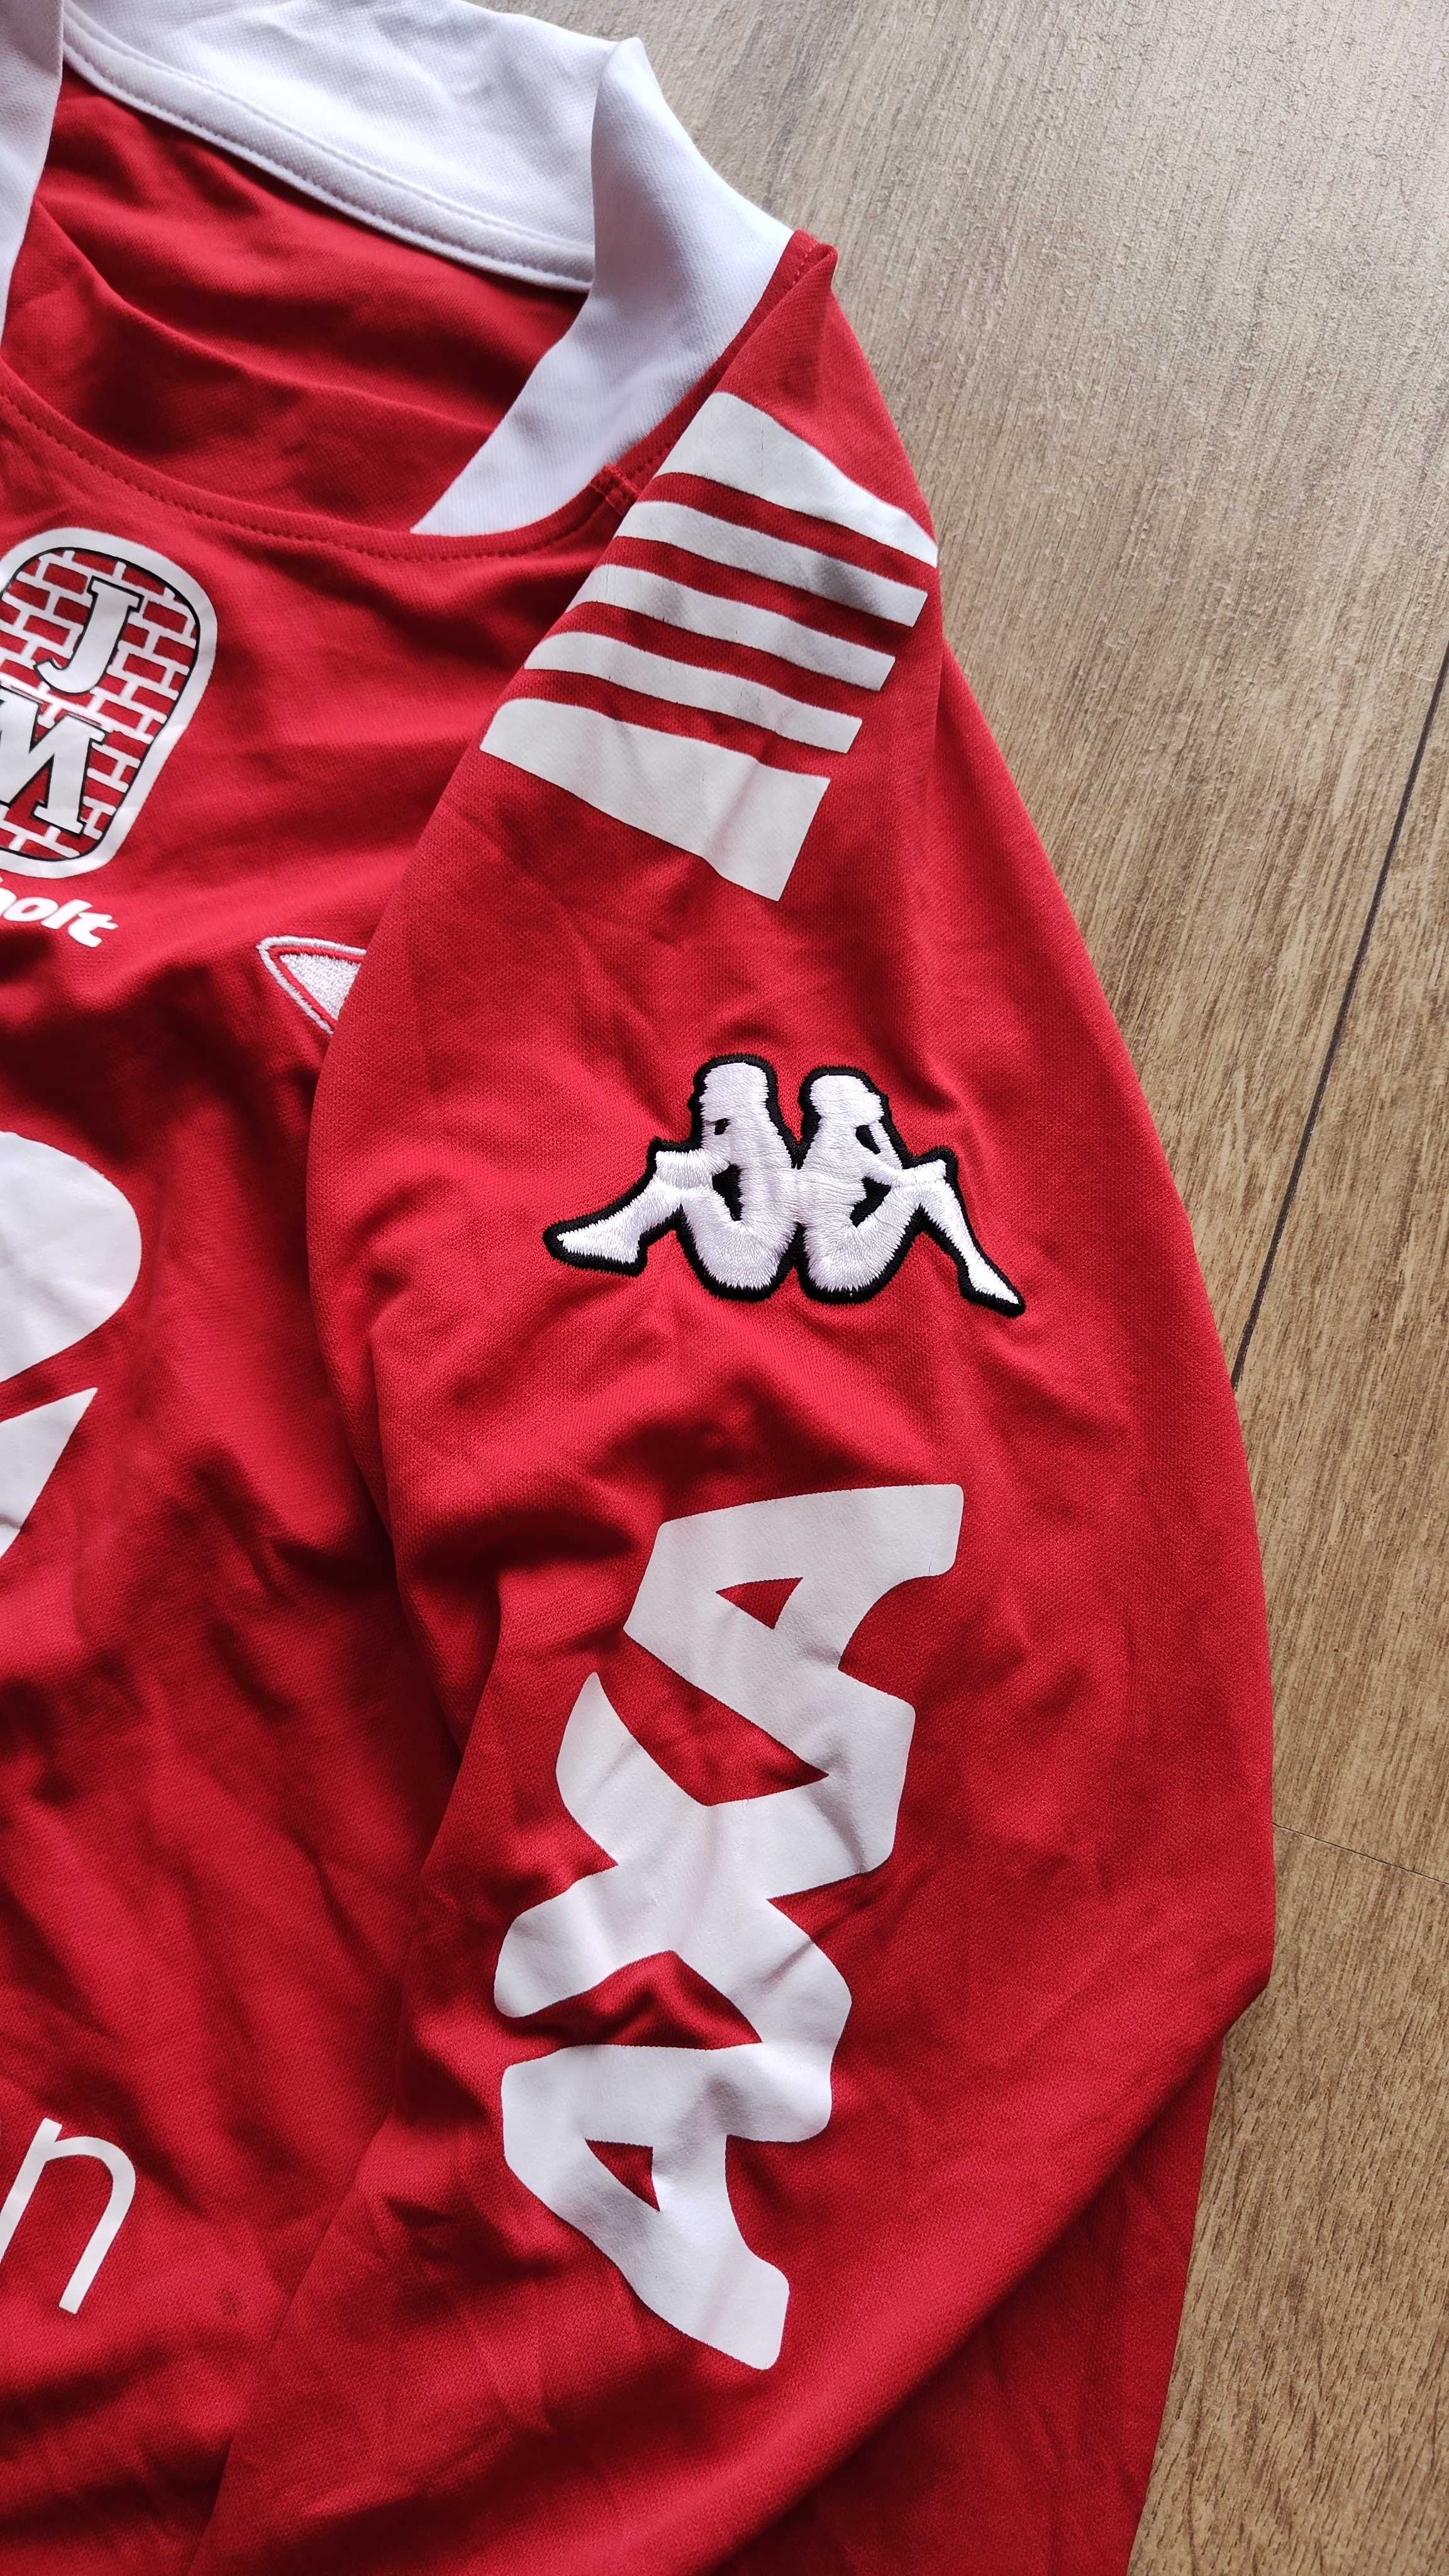 Koszulka piłkarska drużyny Brann, Kappa, rozm XL-XXL